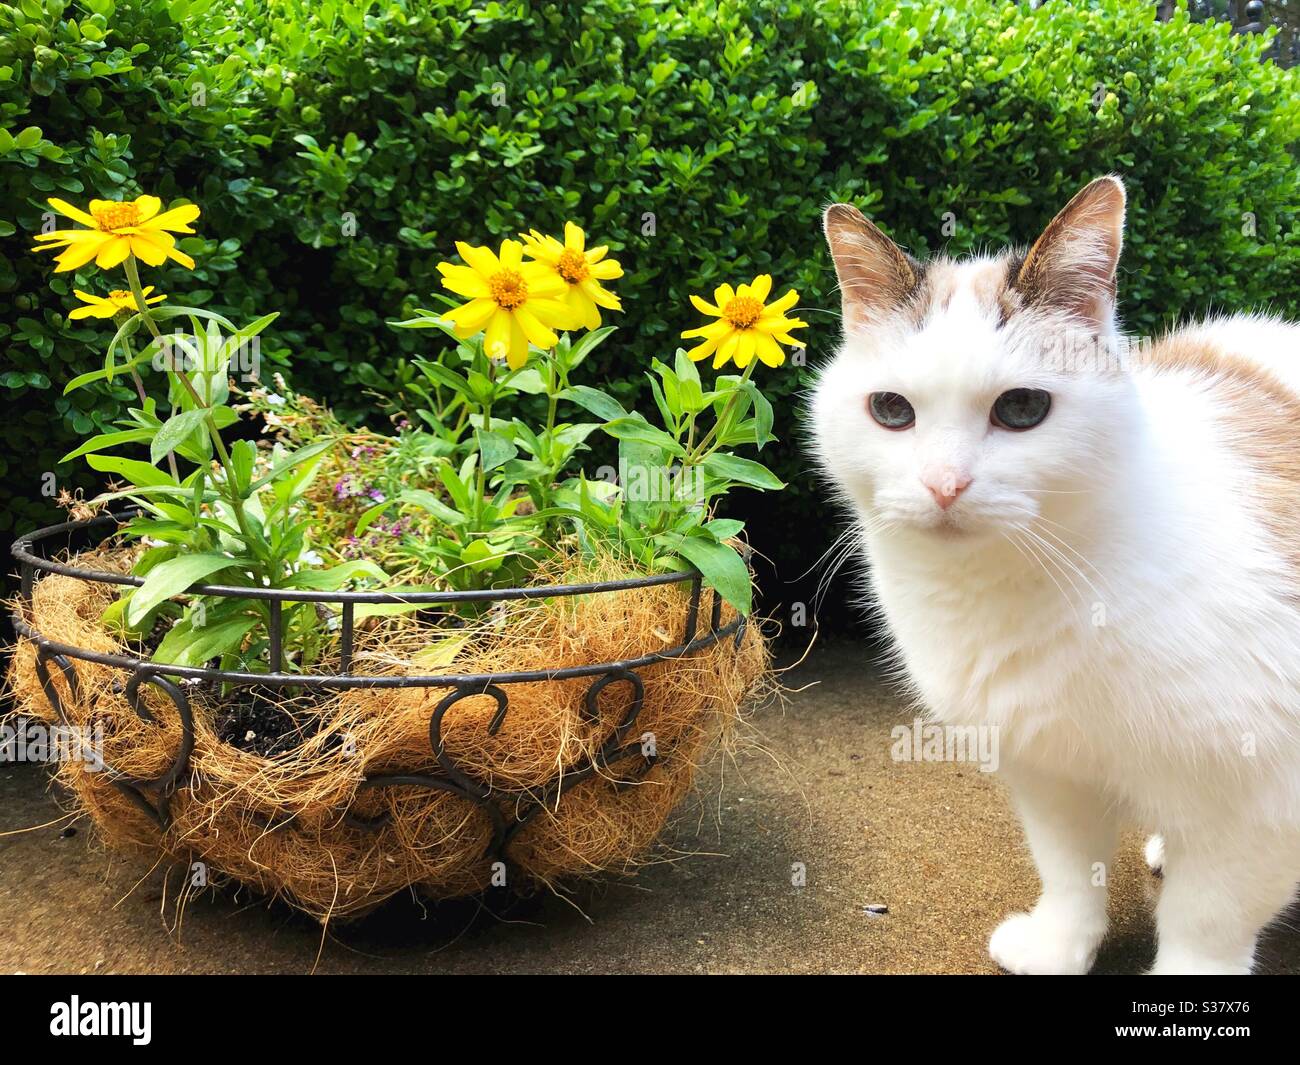 A cat next to yellow zinnia flowers. Stock Photo